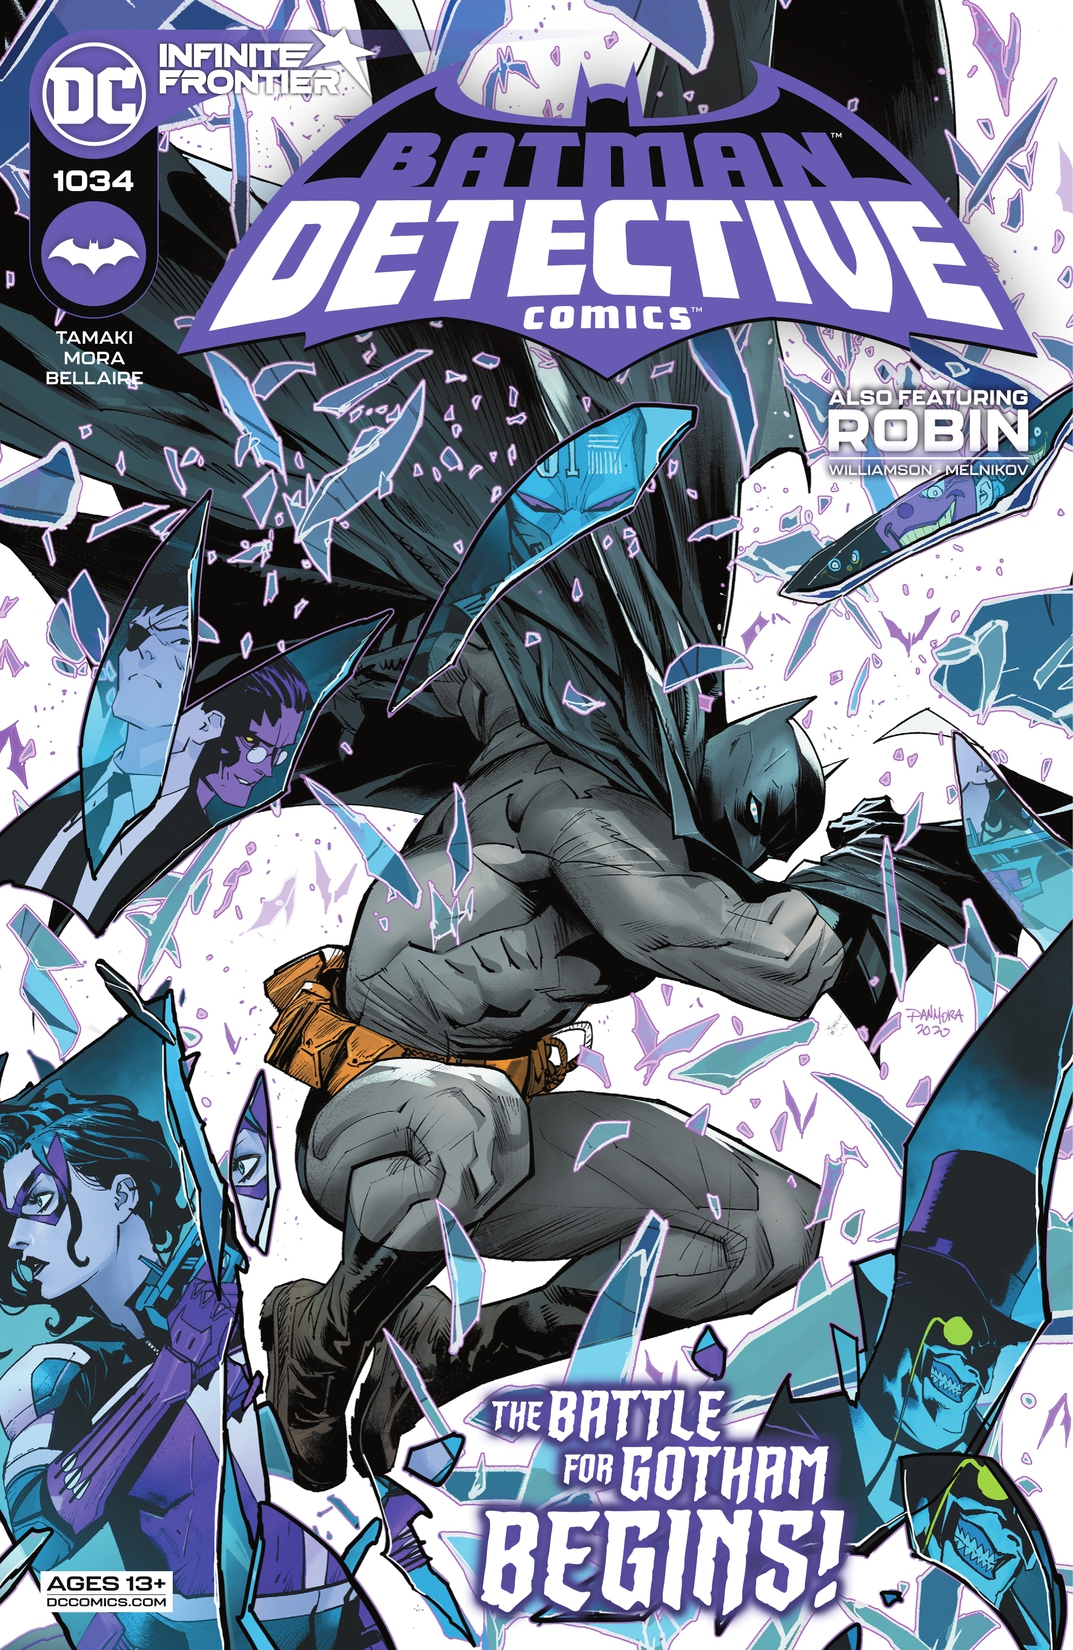 Detective Comics (2016-) #1034 preview images